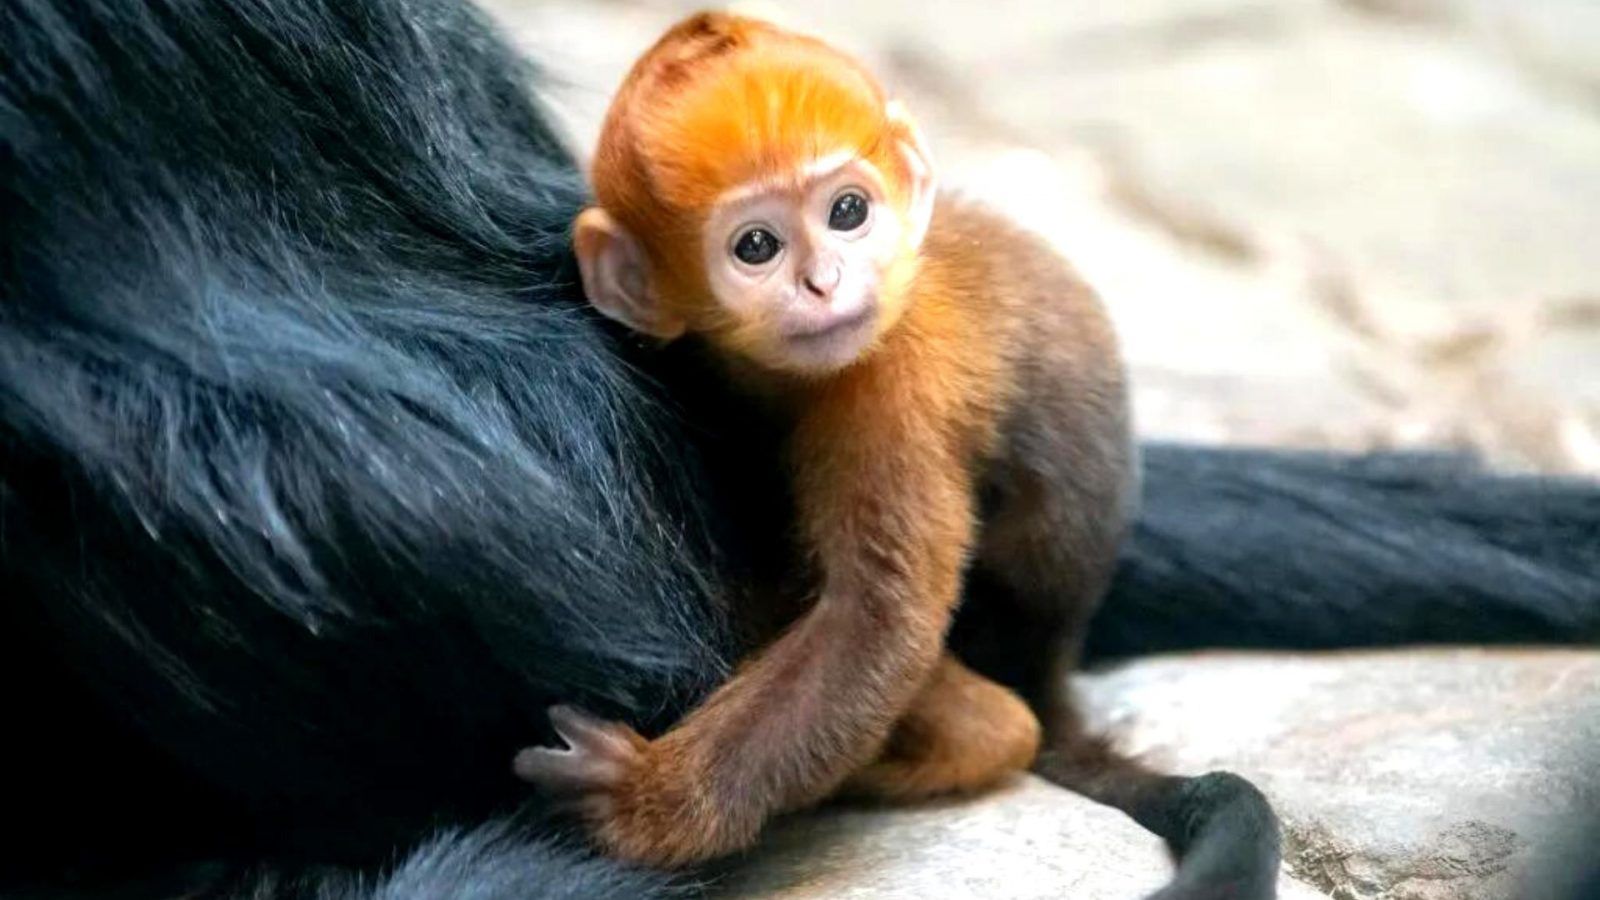 A rare baby monkey was born at an ohio zooâ see the adorable photos